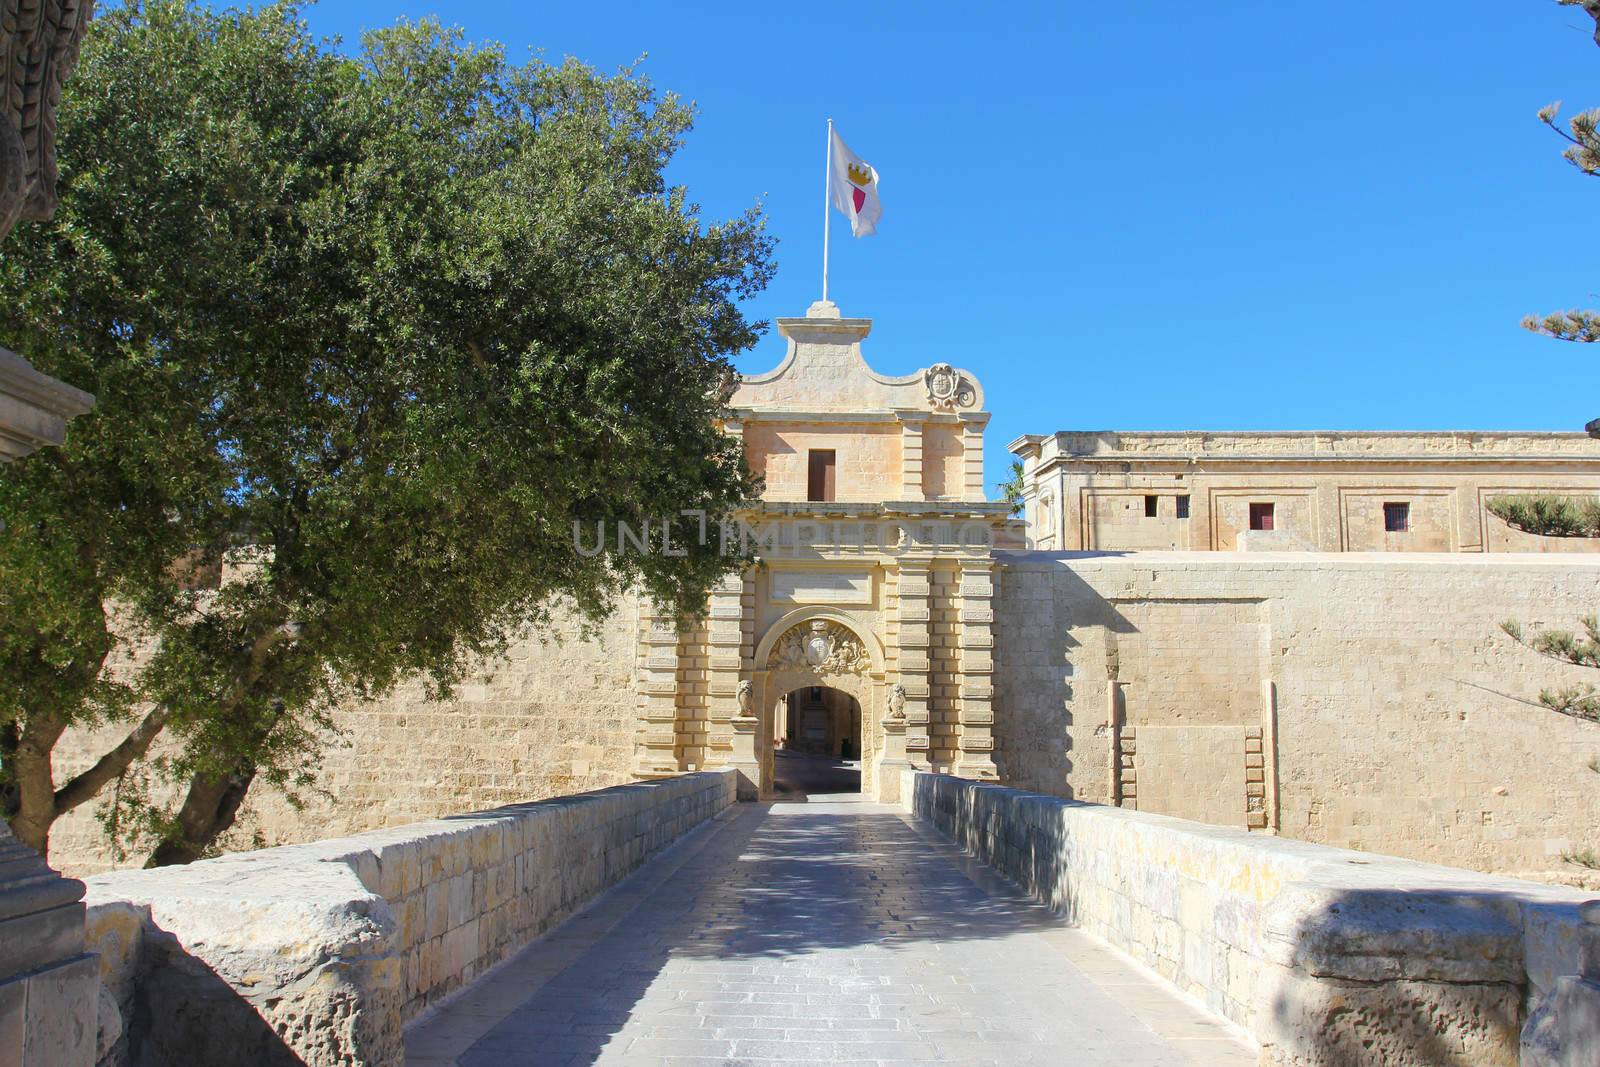 The entrance to Mdina, former capital of Malta, Europe